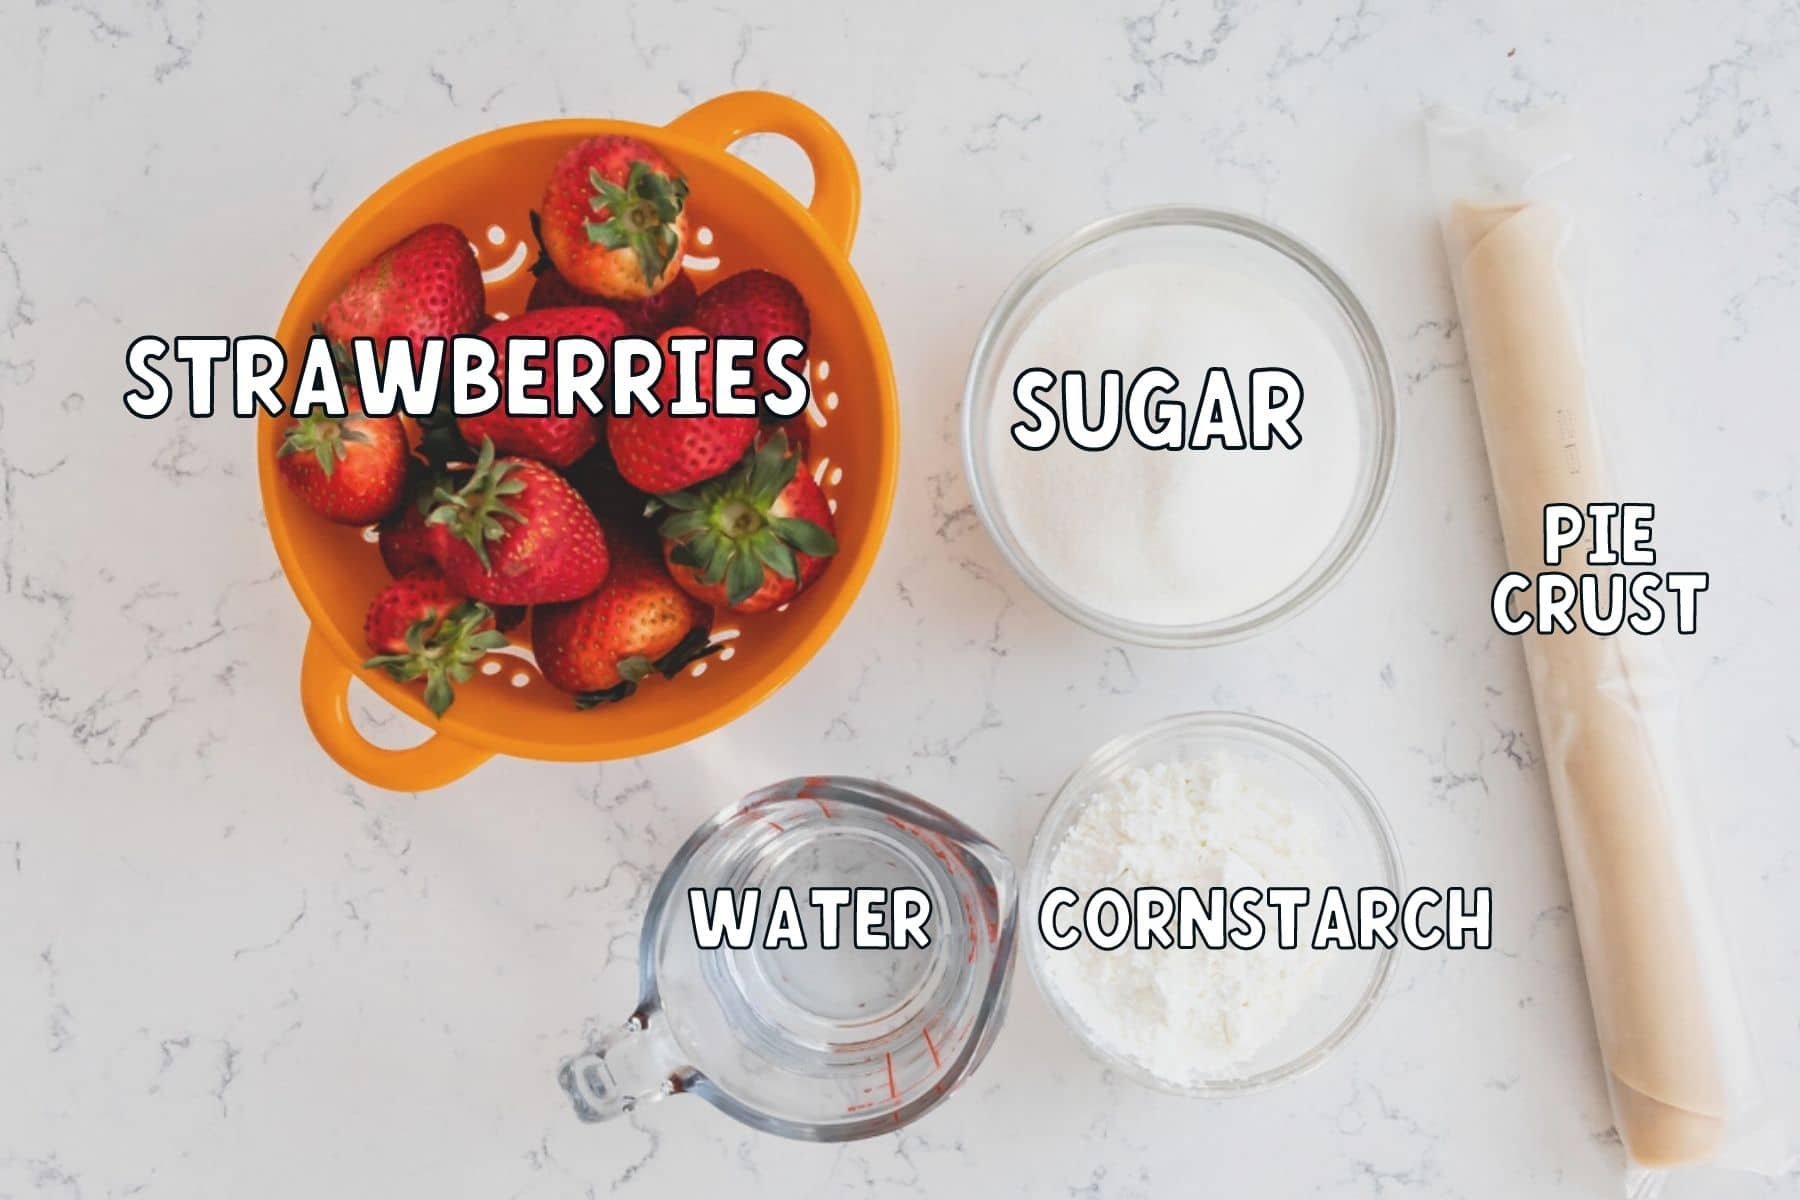 Ingredients in strawberry pie